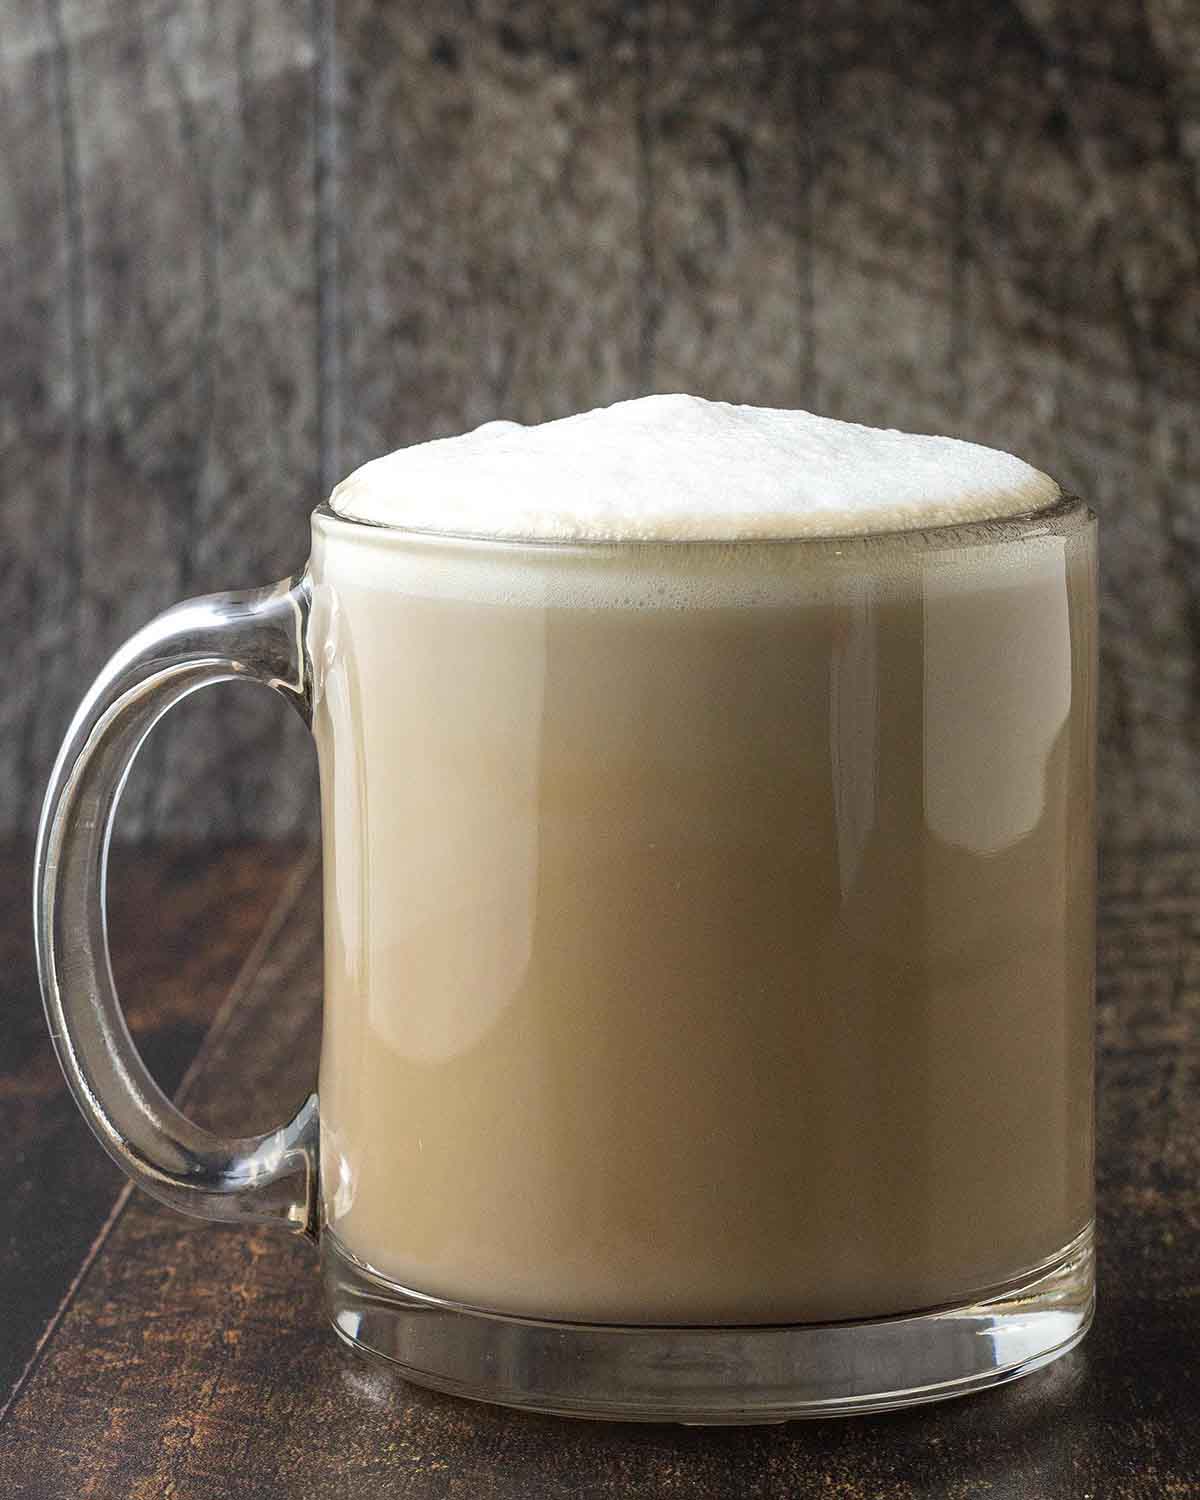 A homemade oat milk latte in a glass mug.